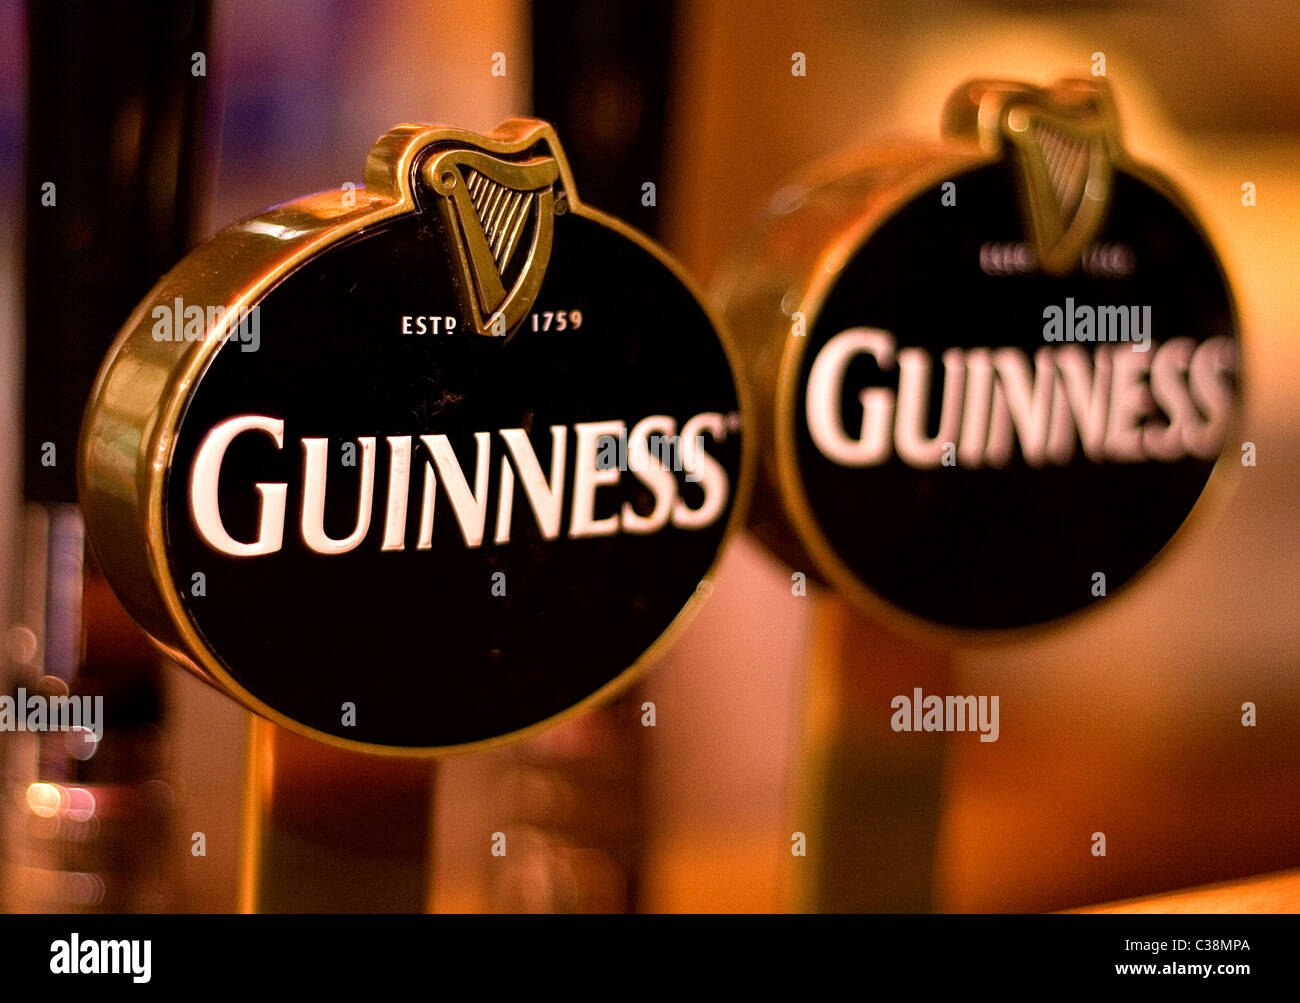 Guinness Irlanda pinta Stout Diageo Bianco Nero irlandese alcool Castlerea Foto Stock